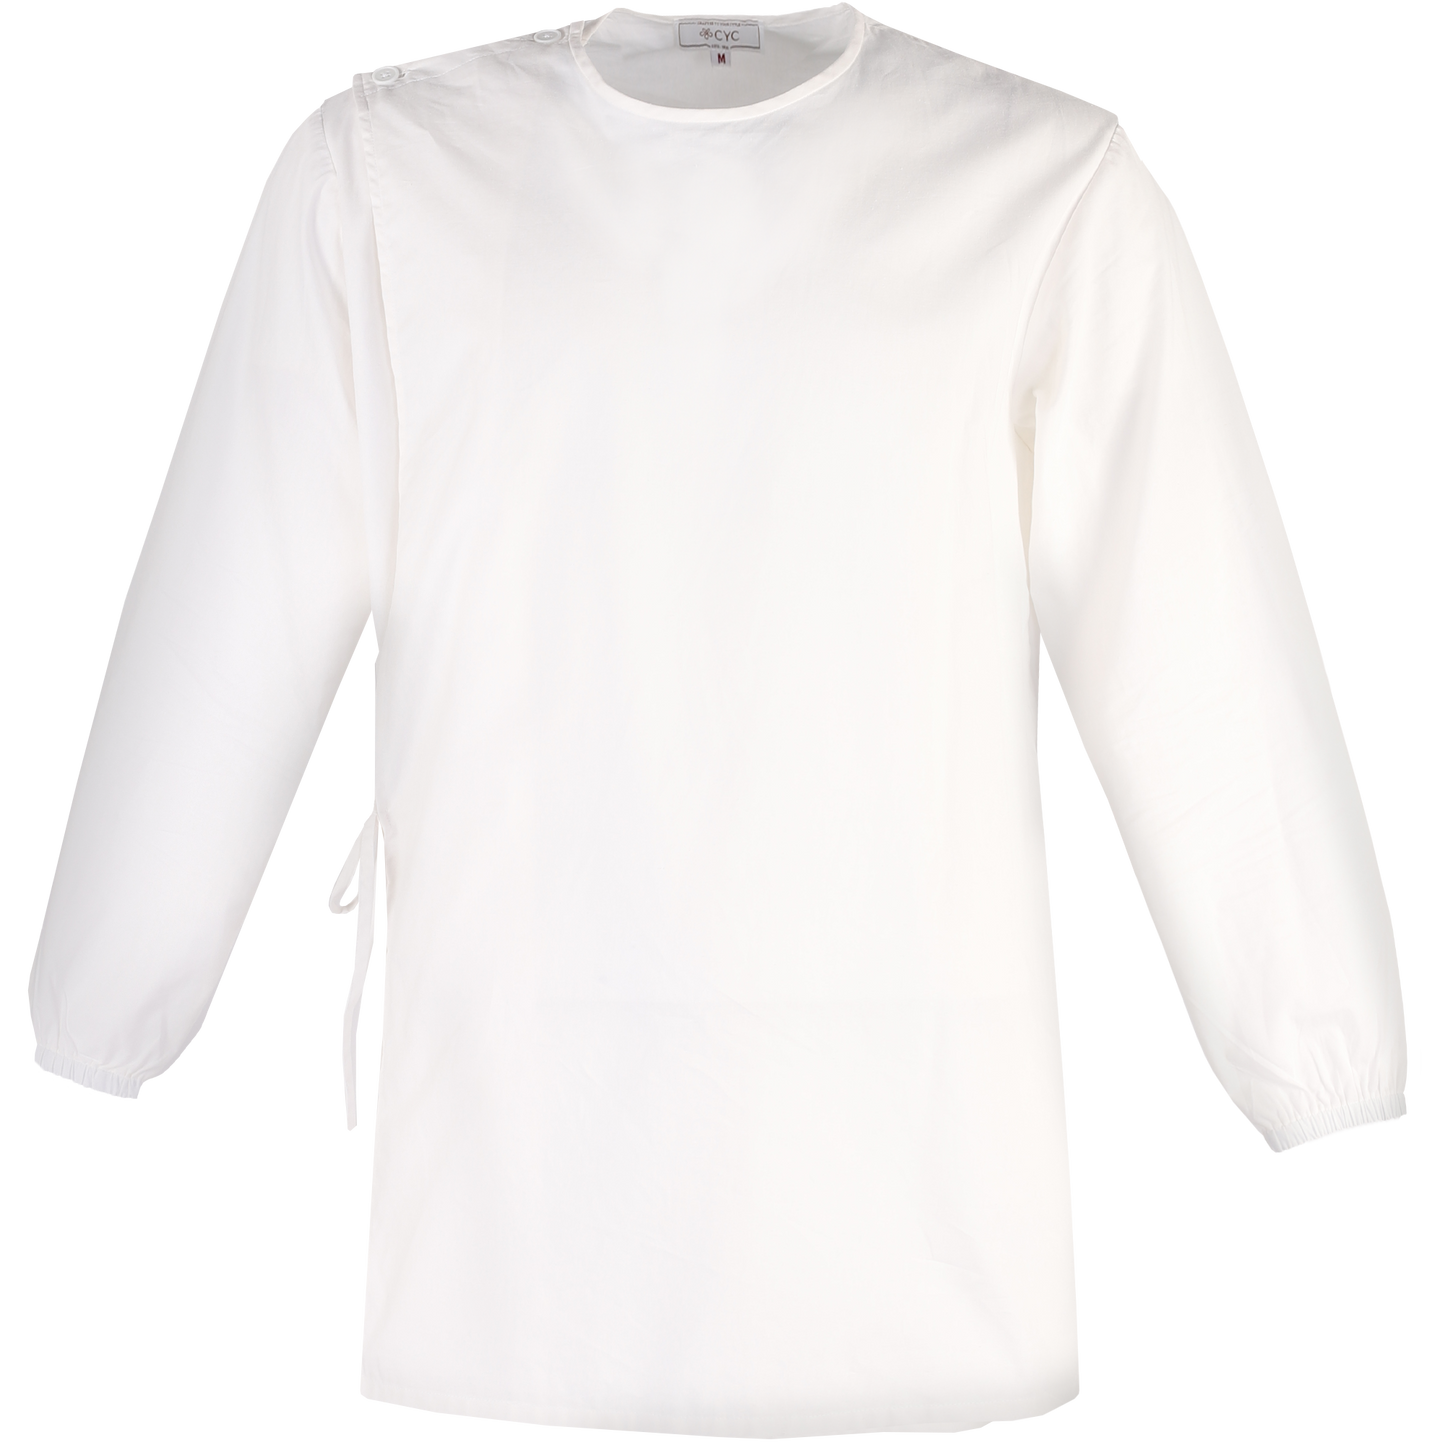 White Cotton Inpatient Adaptive Pyjama Top — Hospital & Nursing Home uniforms by CYC